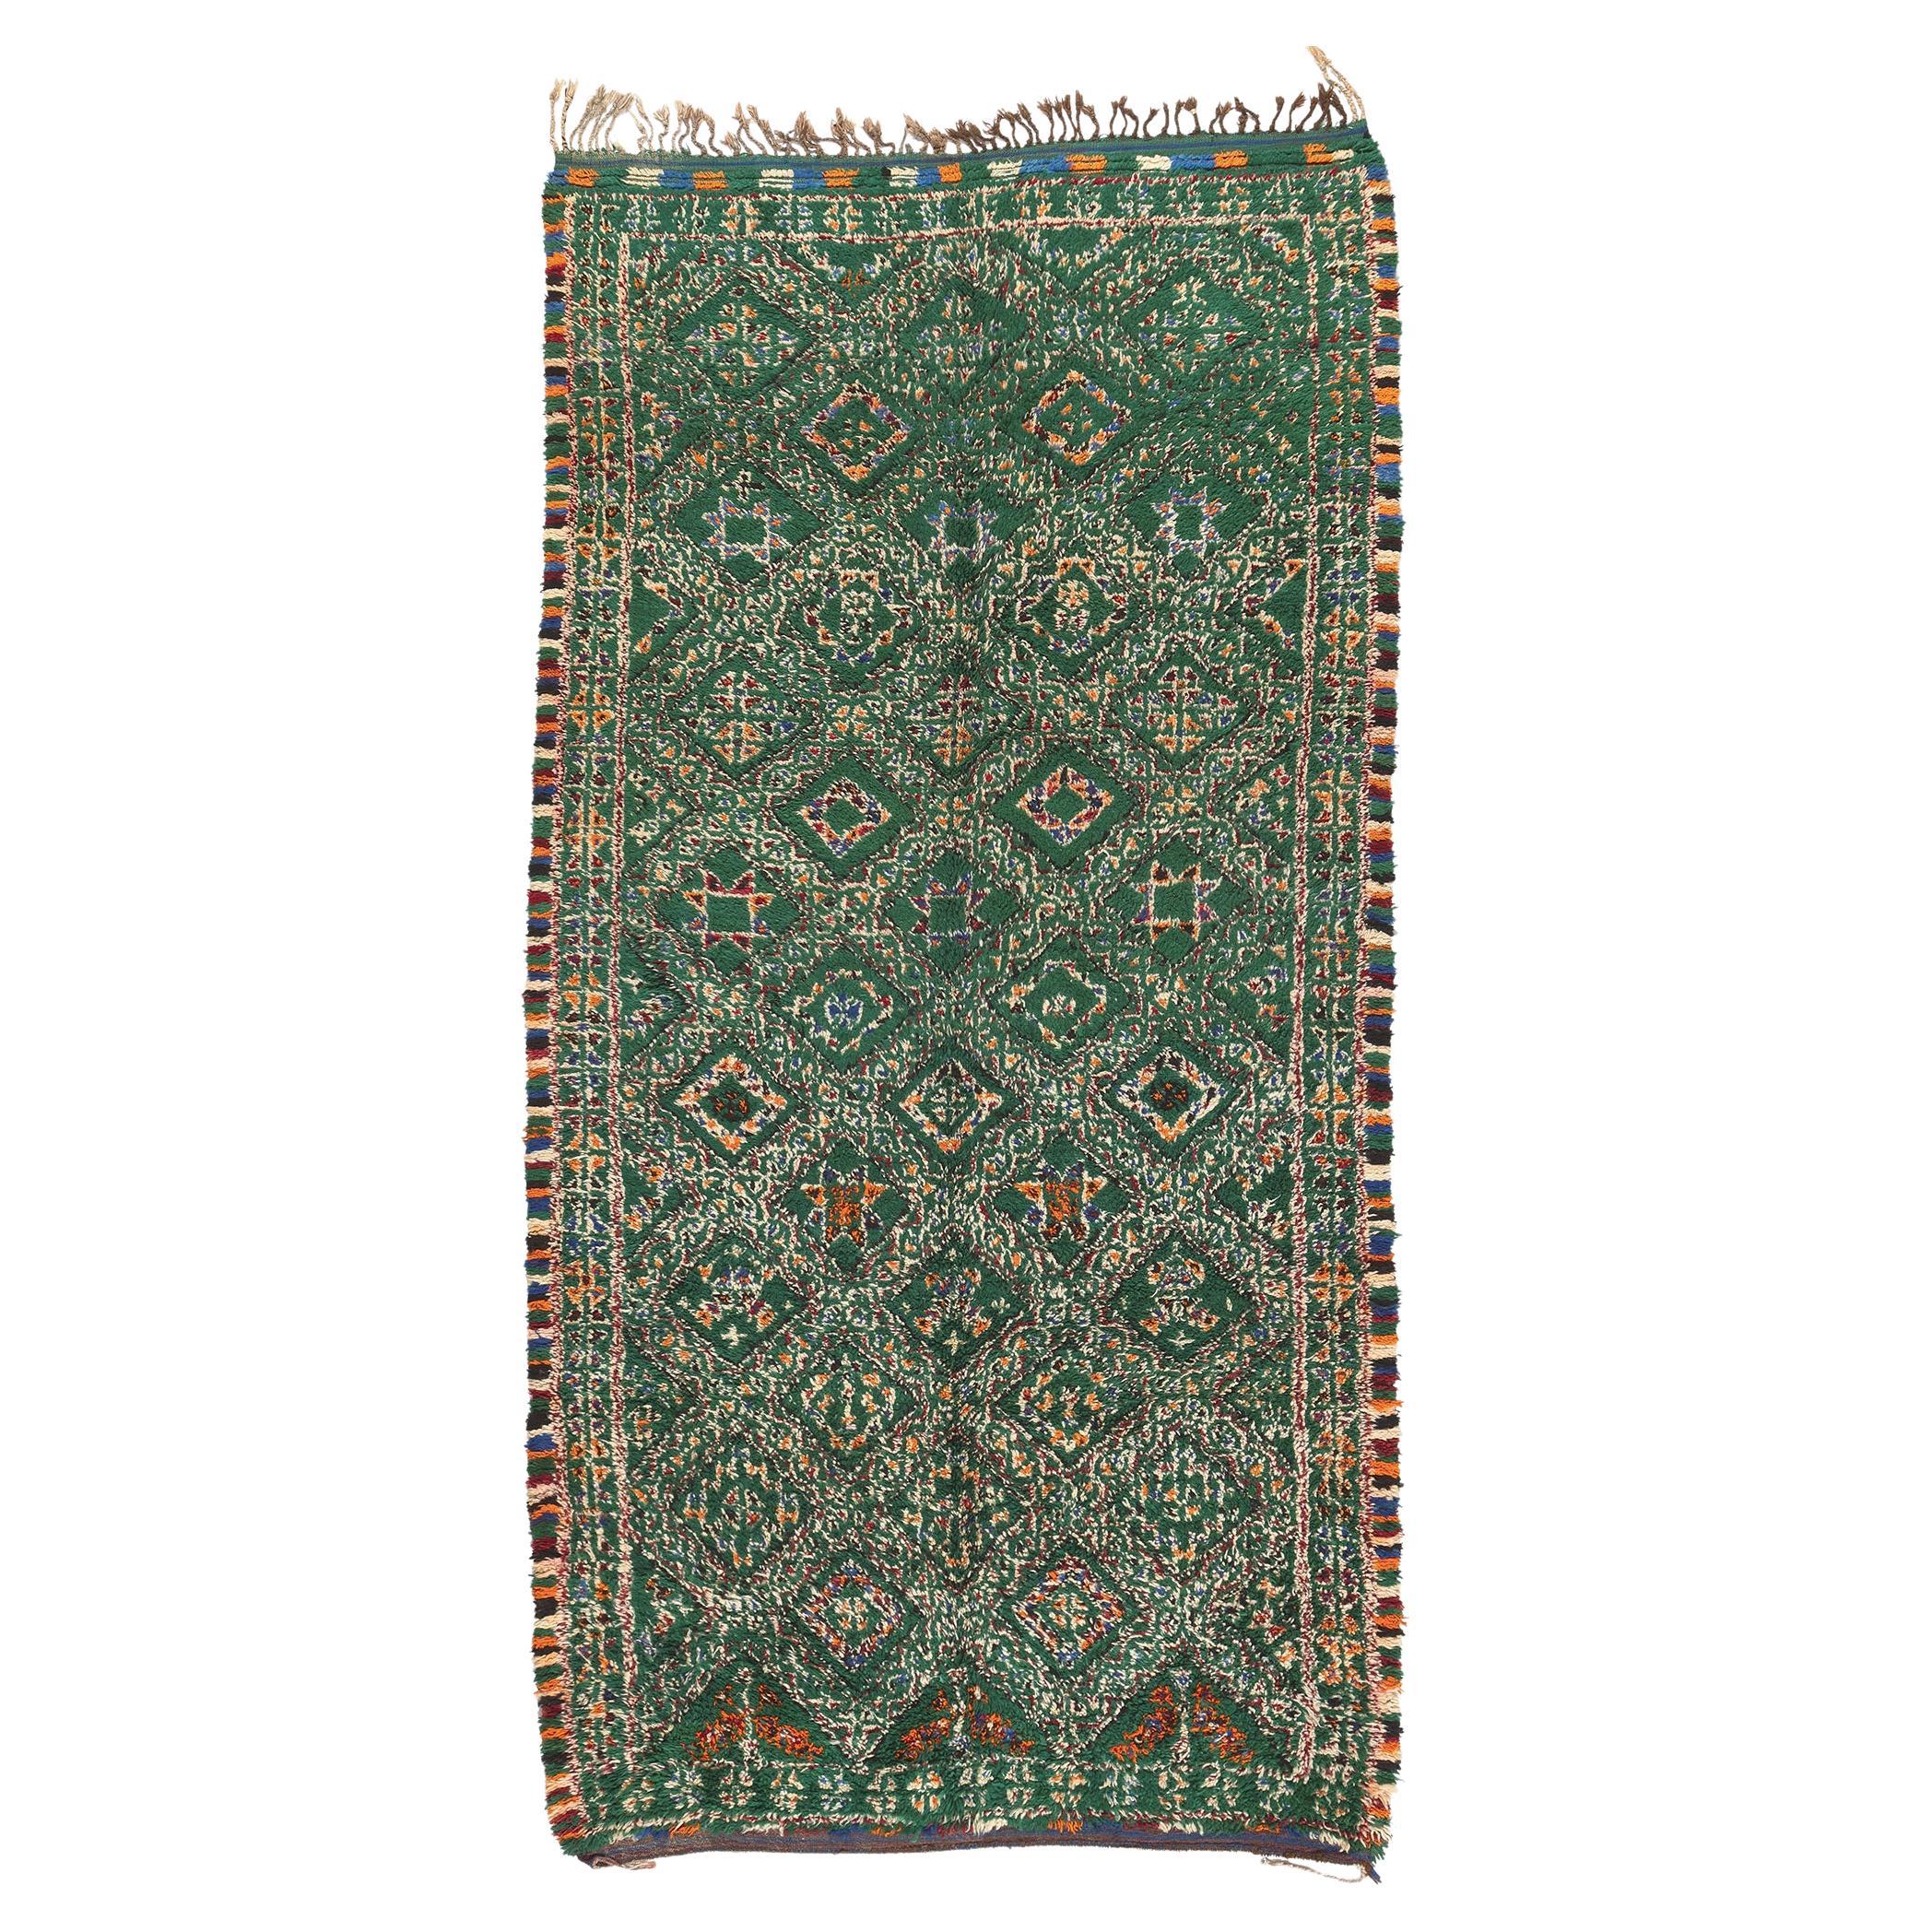 Marokkanischer Beni MGuild Vintage-Teppich in Grün, Cozy Nomad Meets Stammeskunst-Enchantment, Vintage